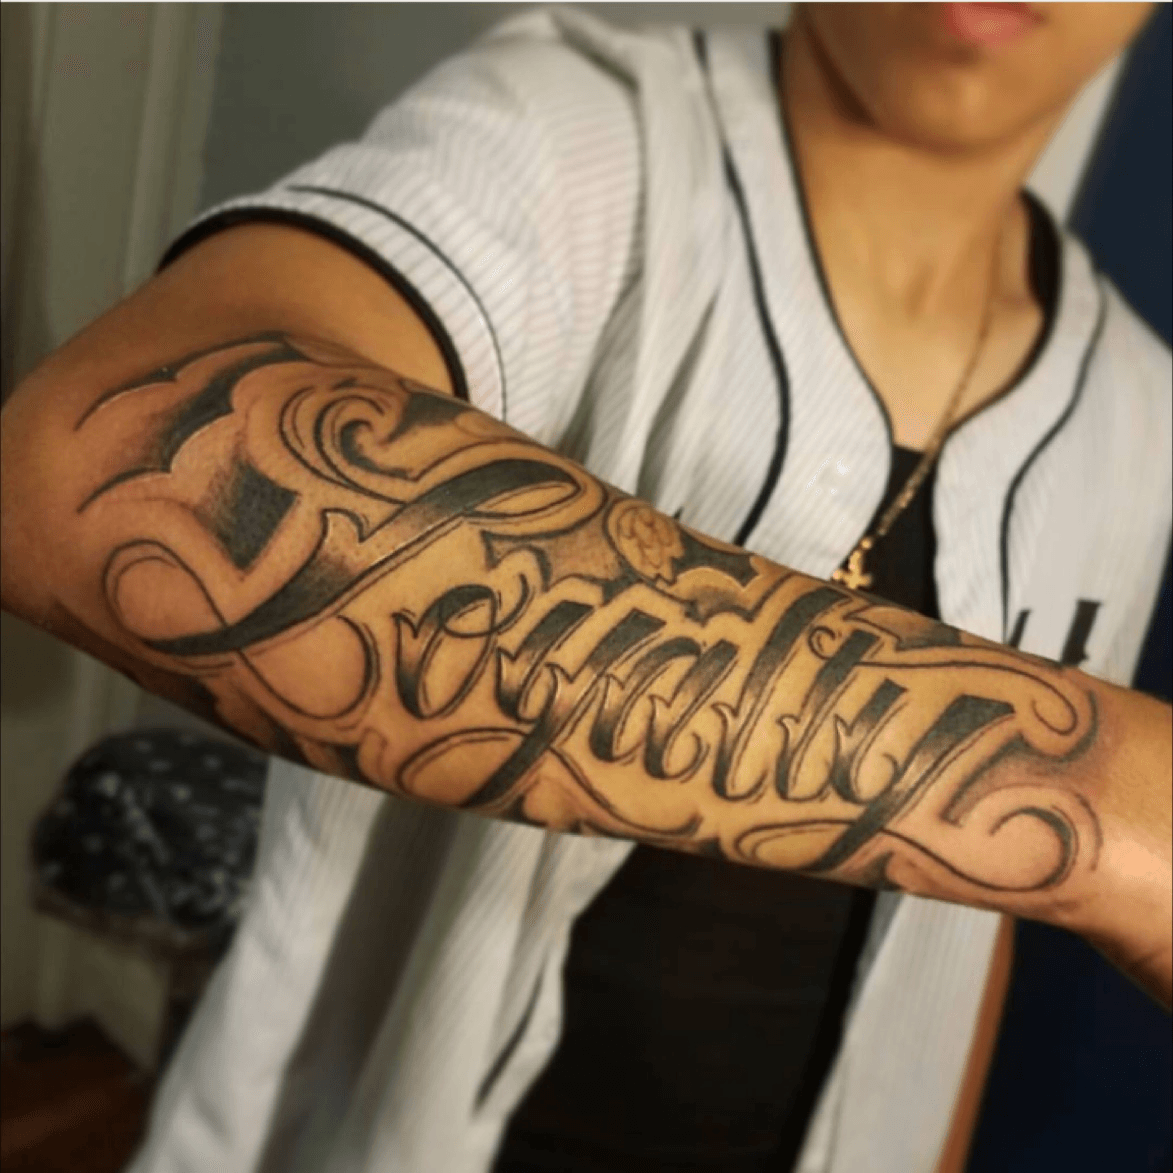 Tattoo uploaded by Josh Whittaker  Loyalty rokmatic ink tattoo  freehand loyaltytattoo  Tattoodo